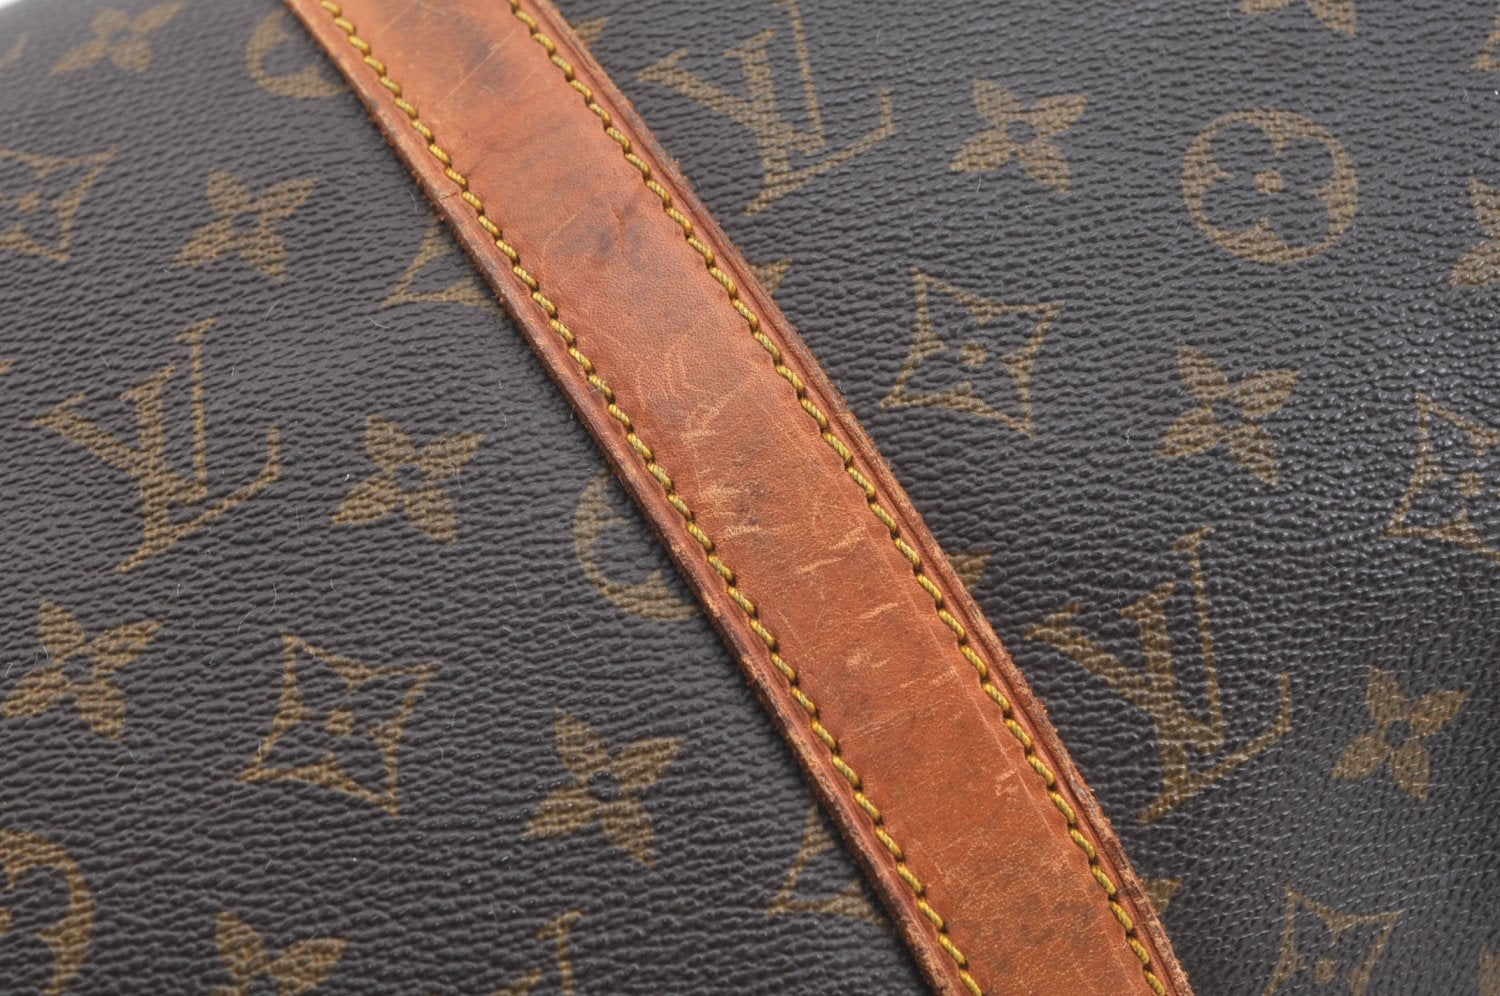 Authentic Louis Vuitton Monogram Keepall 50 Travel Boston Bag M41426 LV K7184